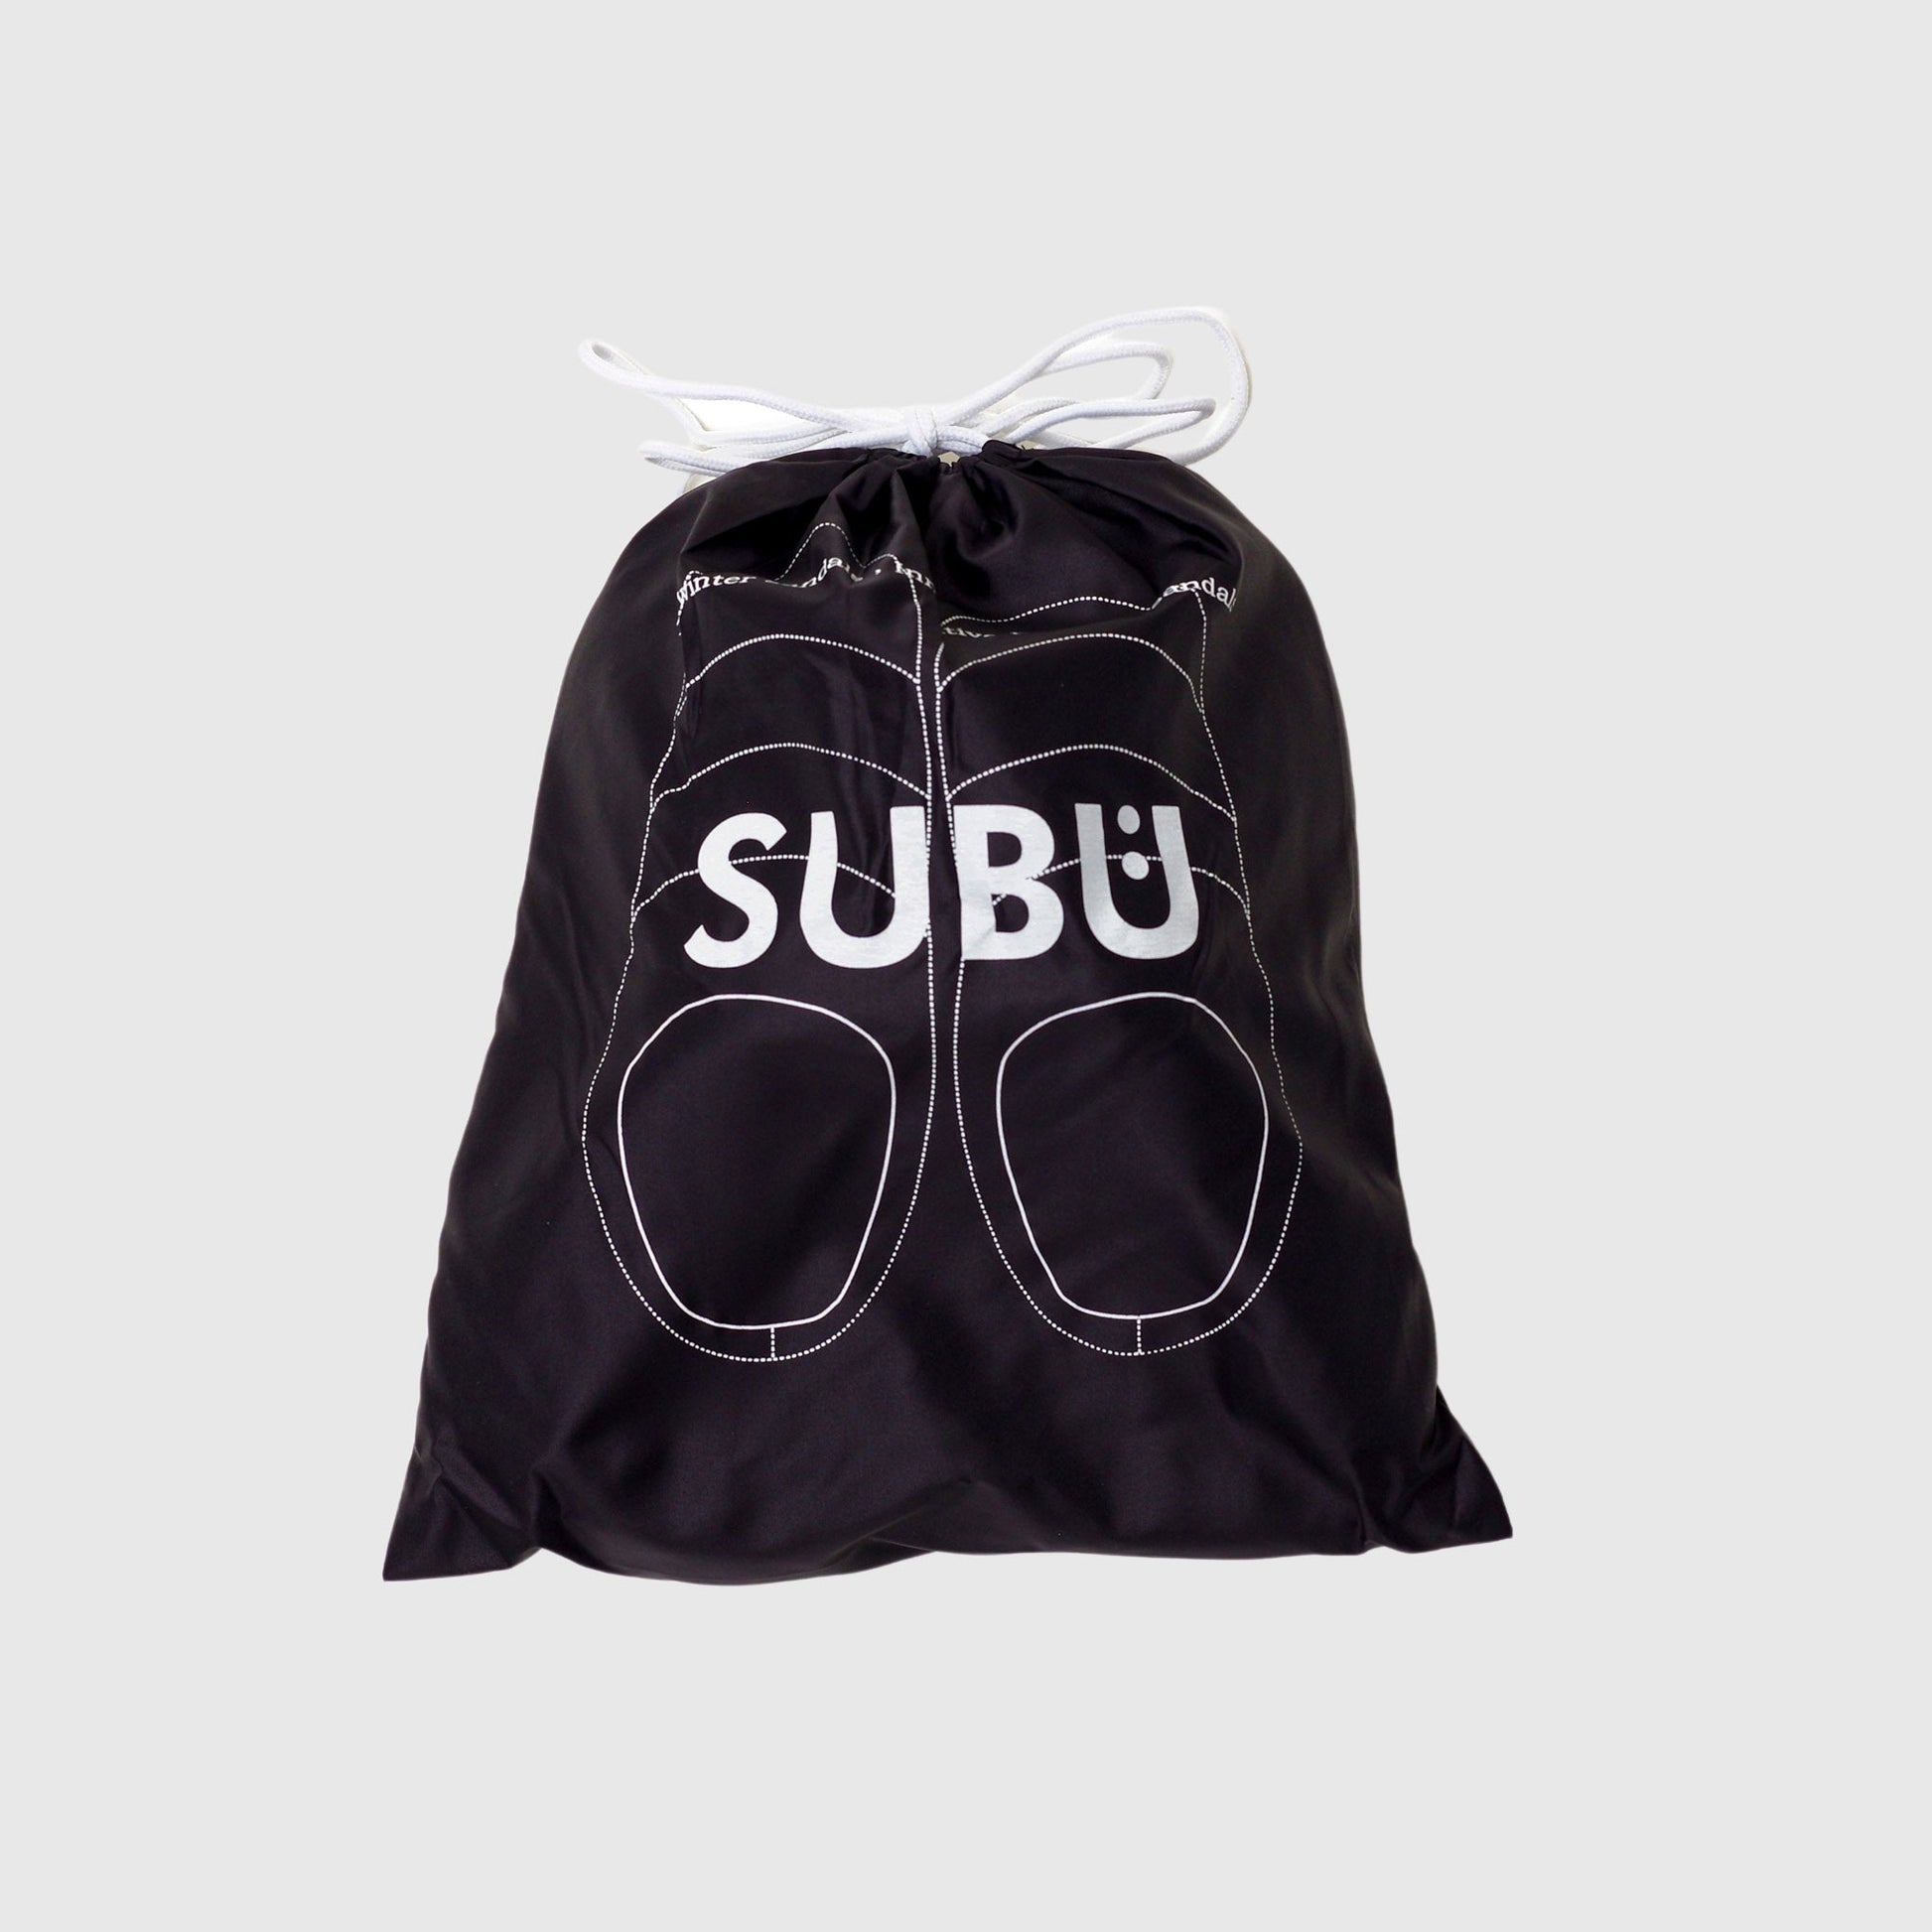 Subu Slippers - Black Slippers Subu 